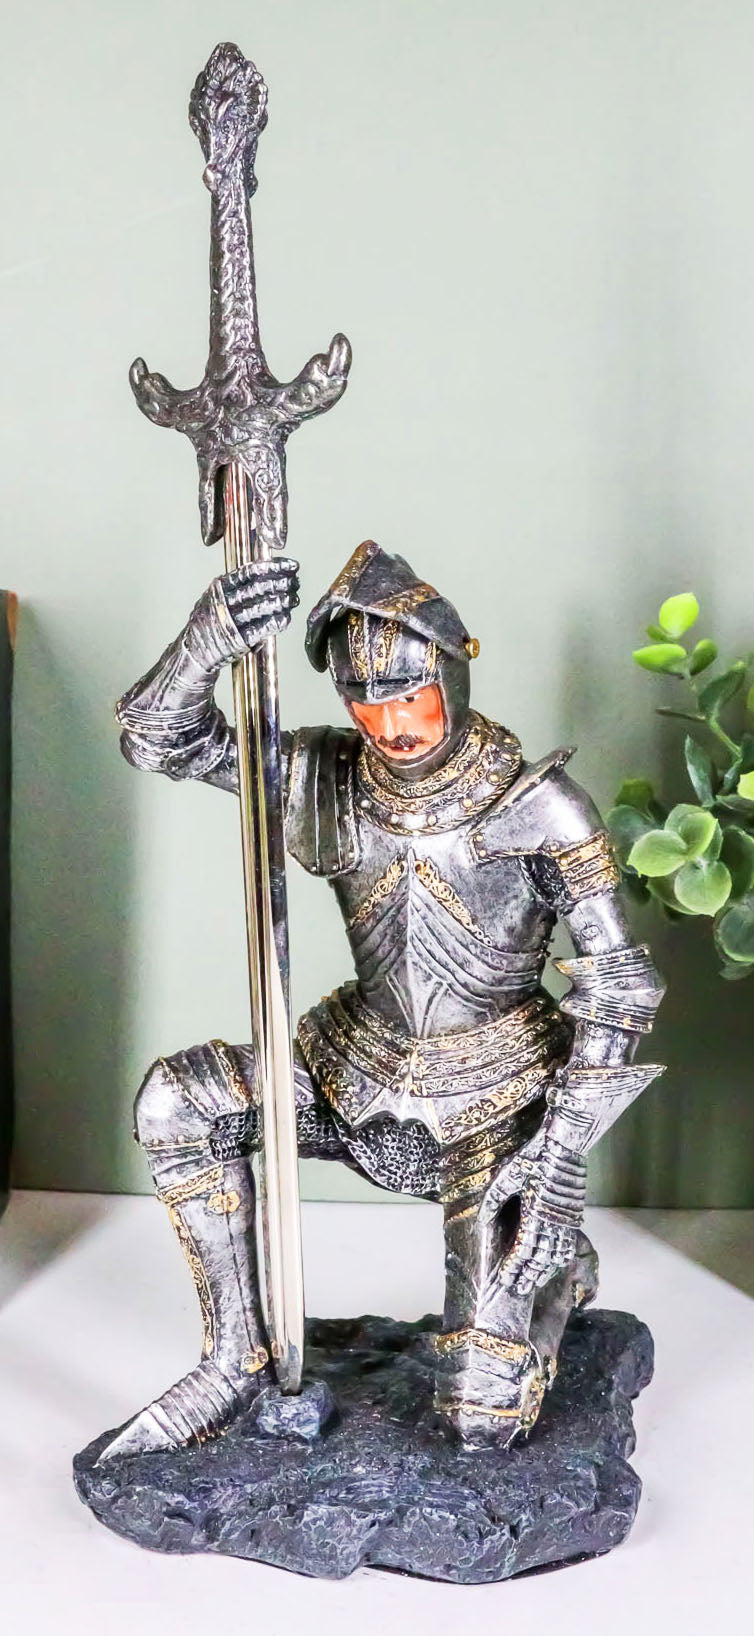 The Accolade Kneeling Medieval Knight Excalibur Sword Letter Opener Figurine